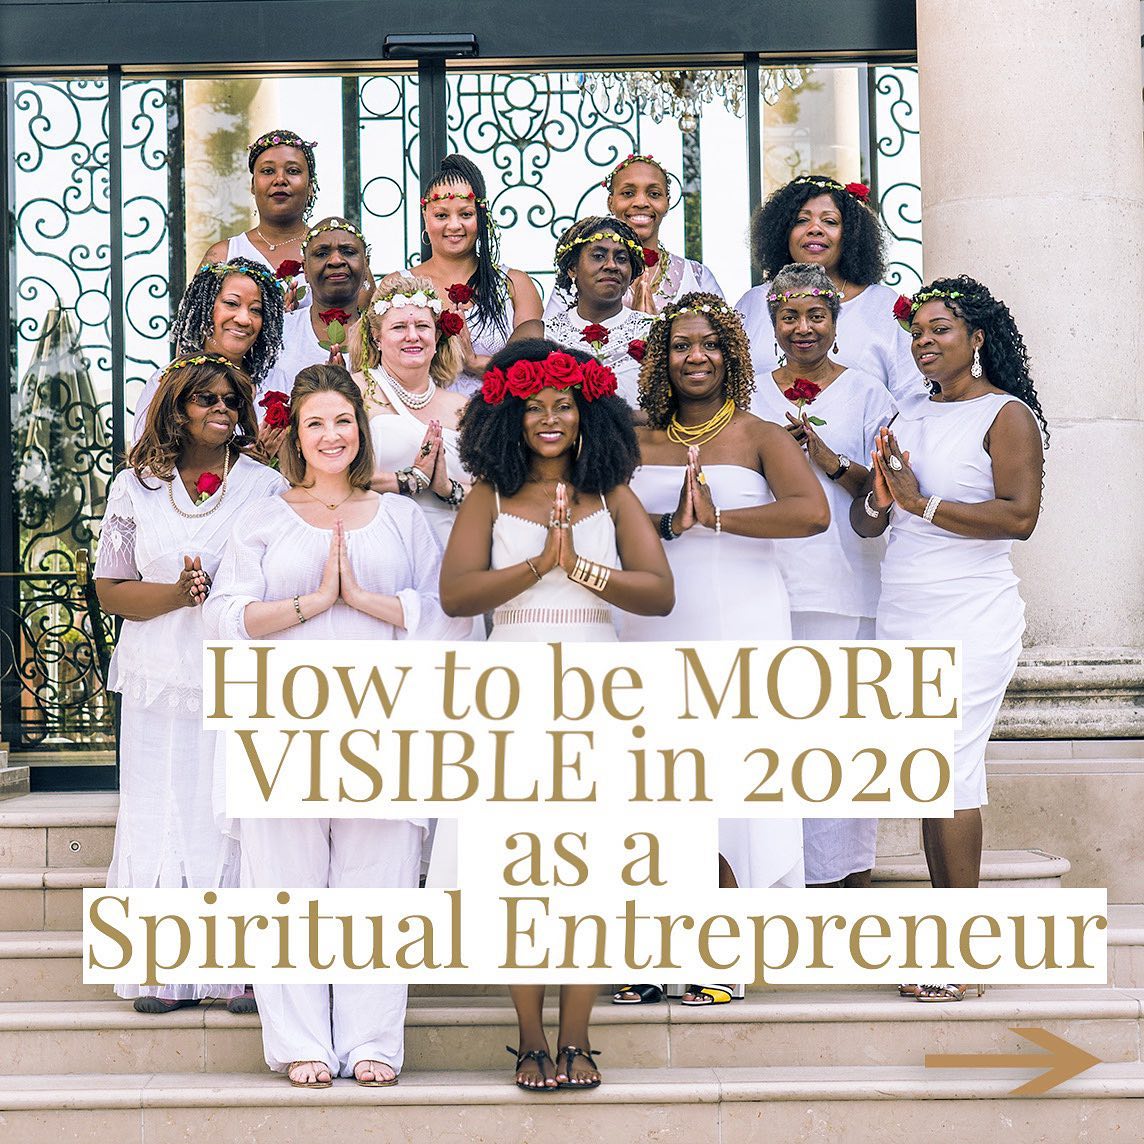 How to be more visible in 2020 as a Spiritual Entrepreneur